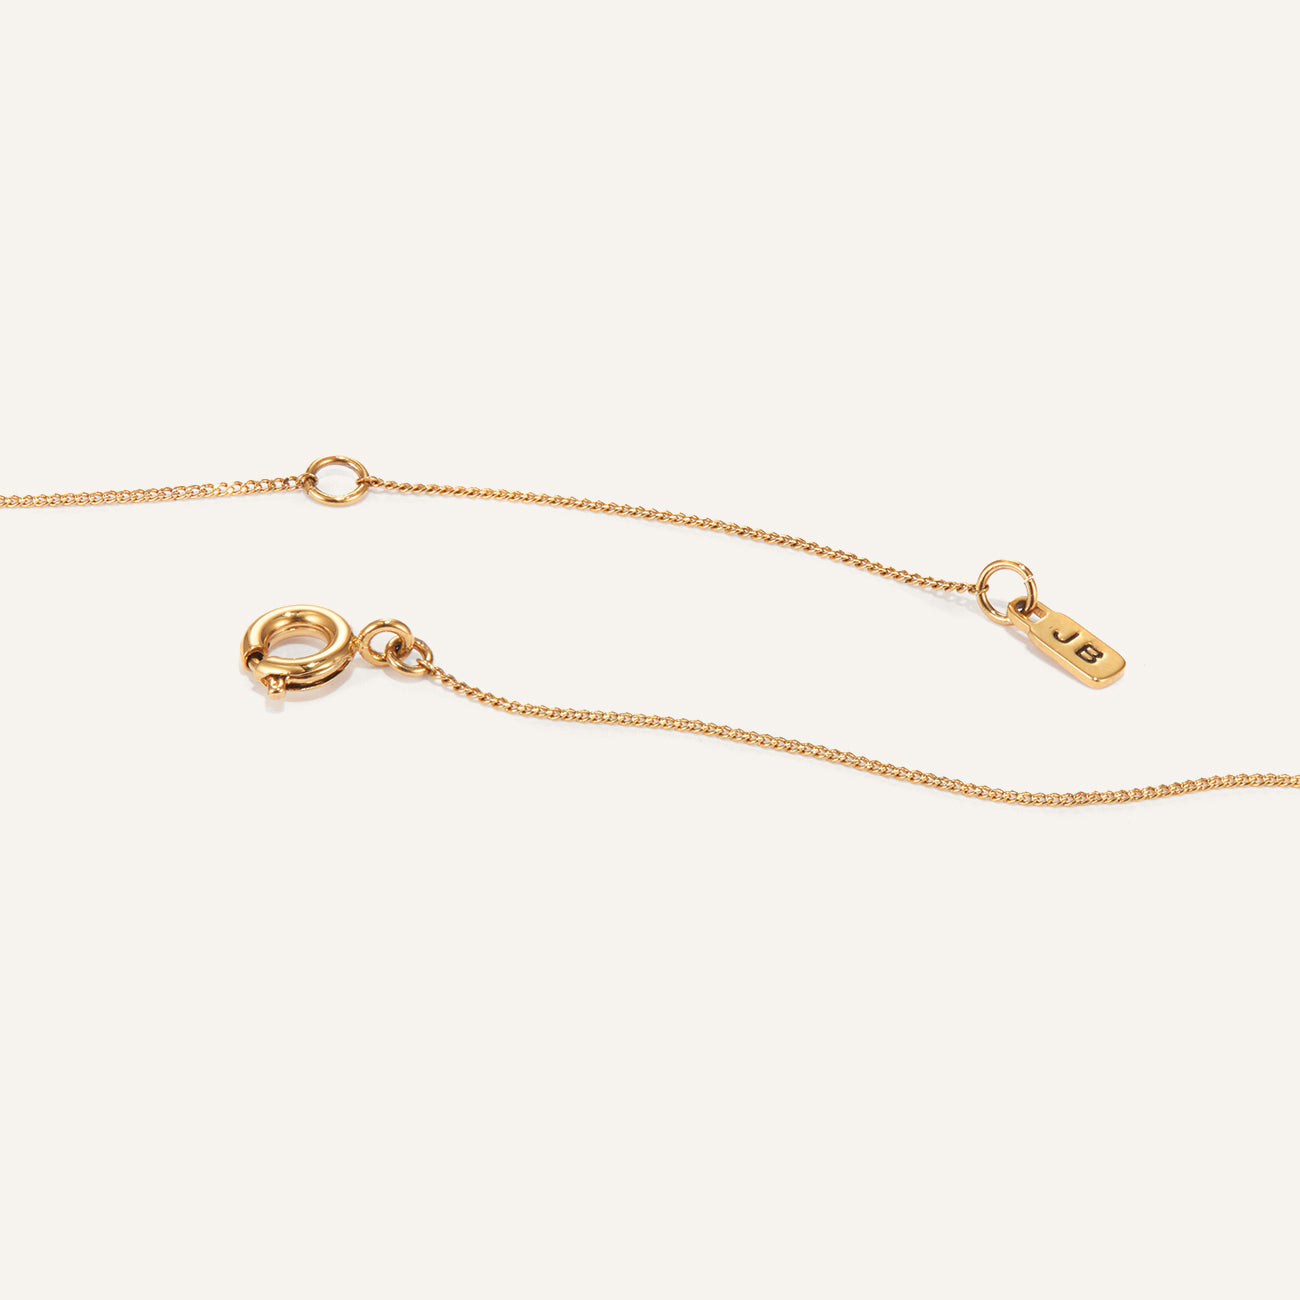 14k Gold Plated Monogram Necklace - K